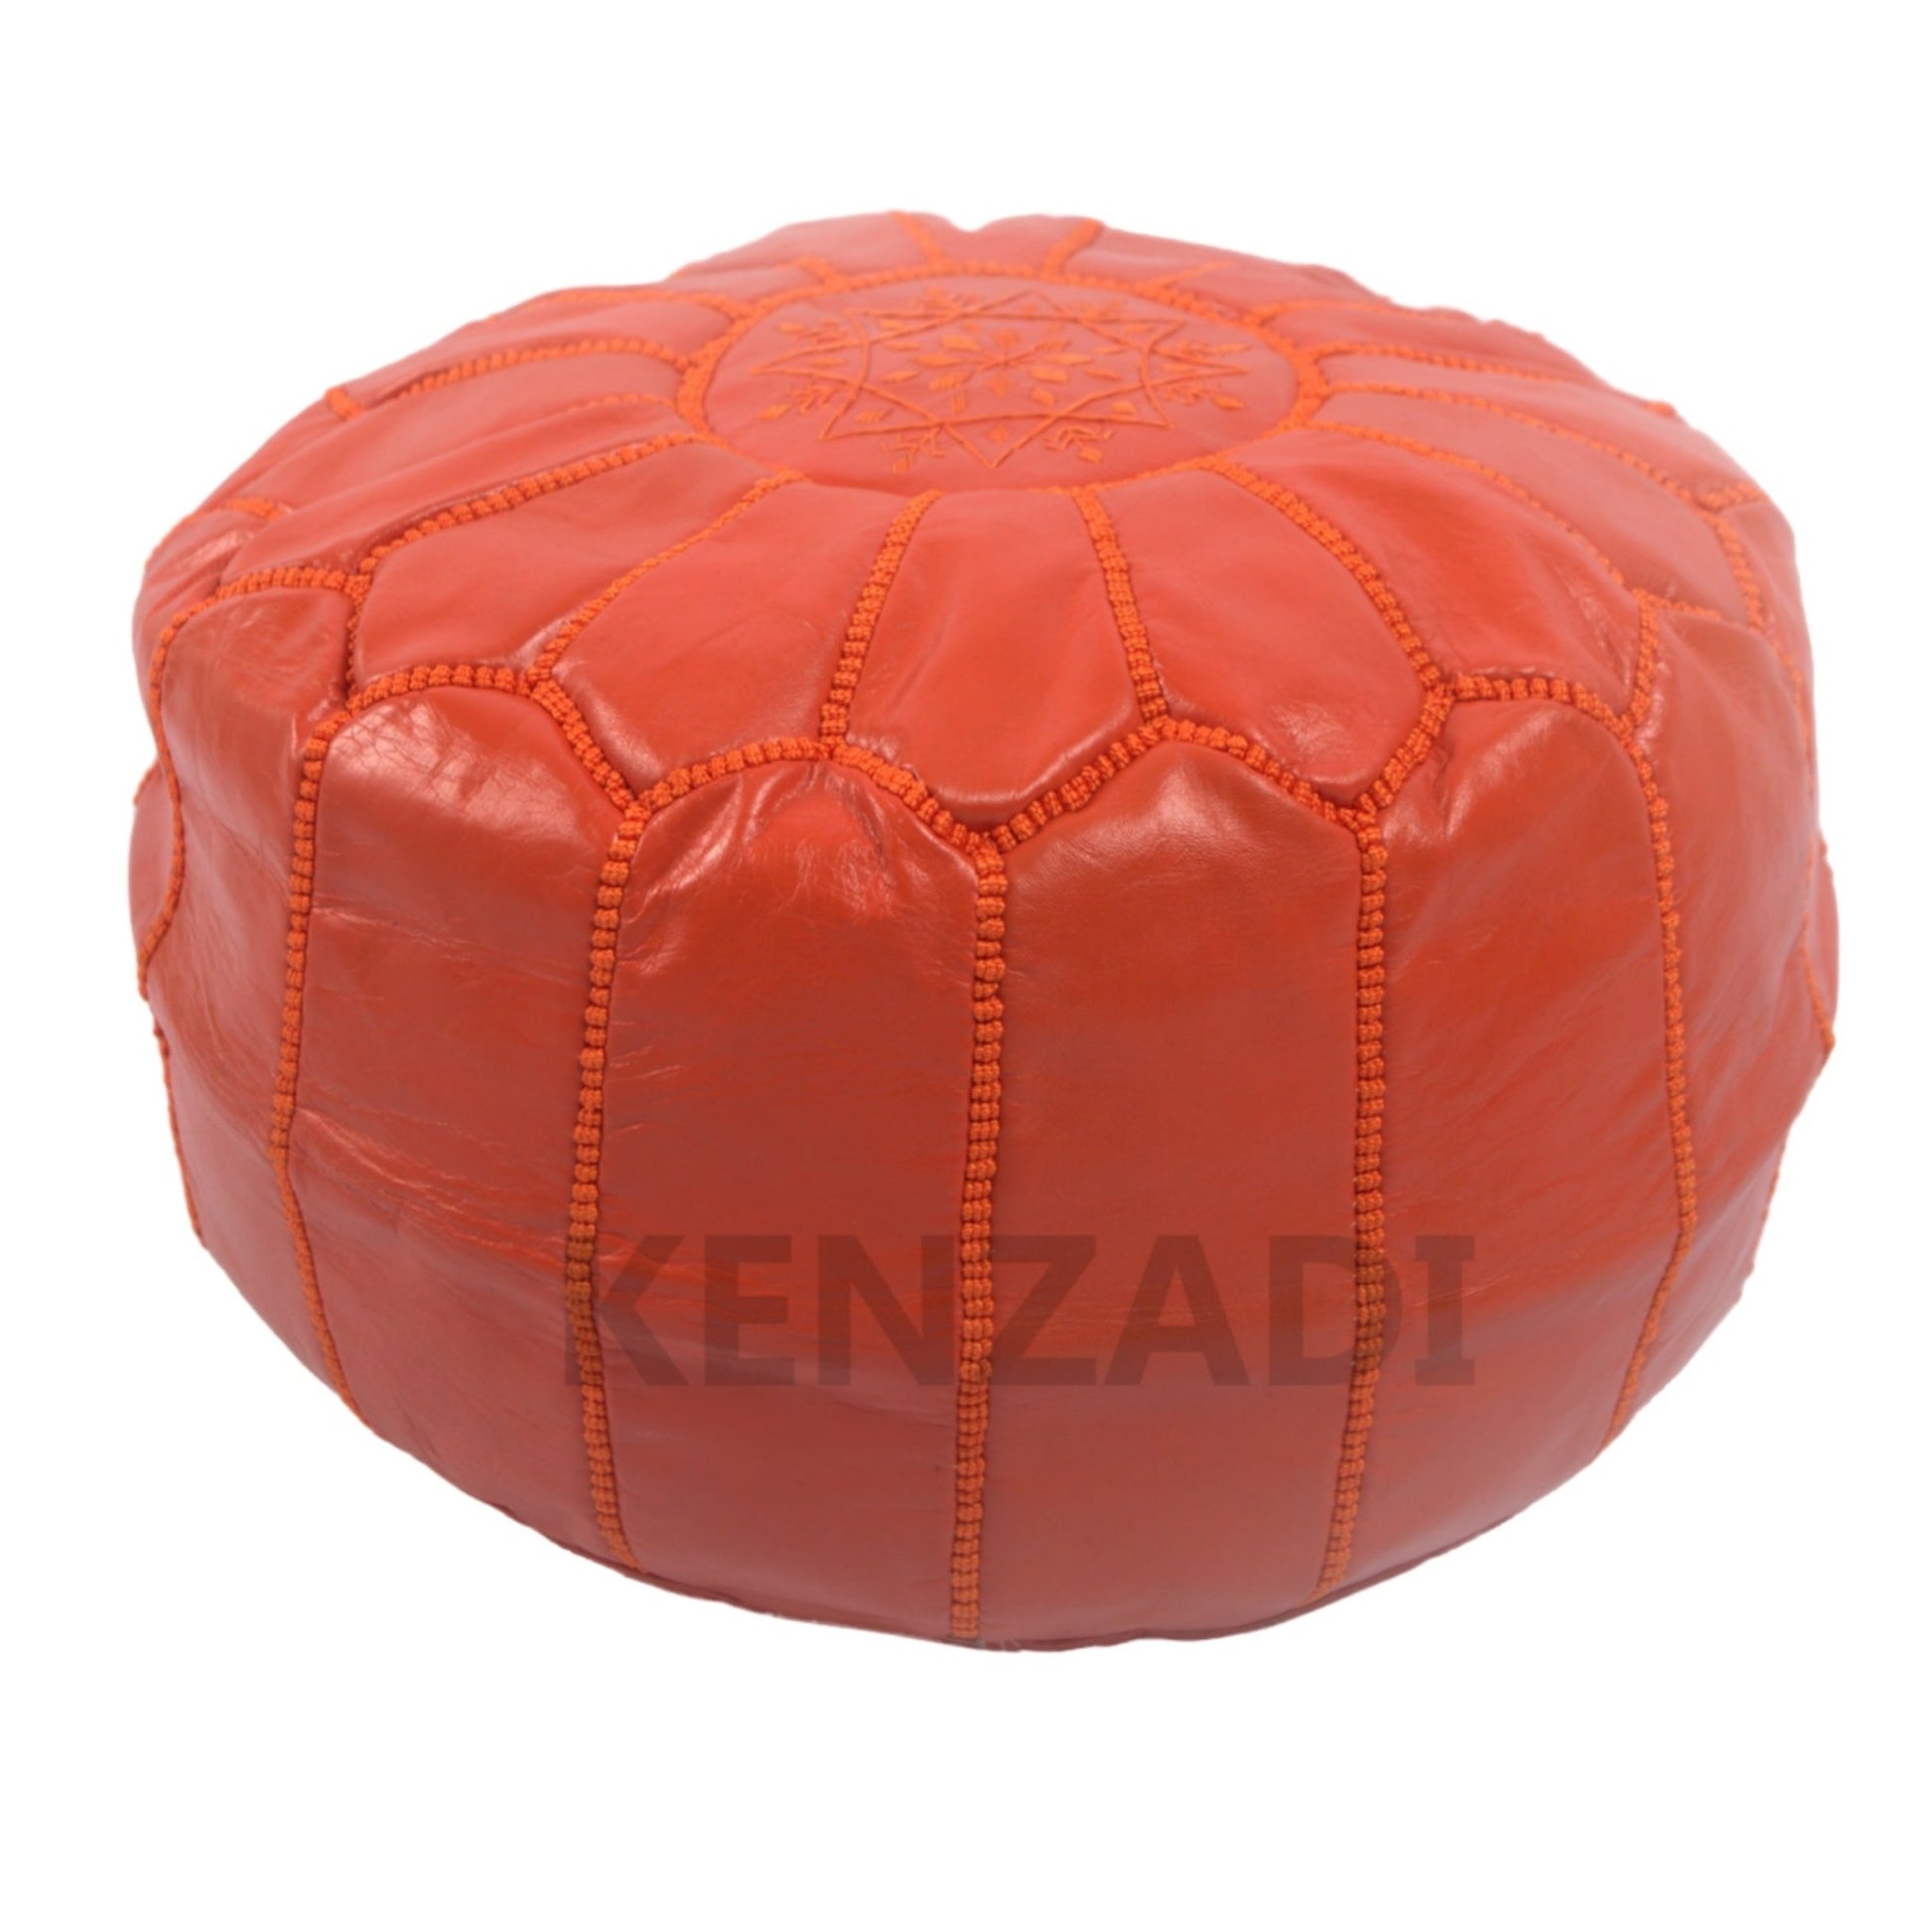 Moroccan leather pouf, round pouf, berber pouf, Orange pouf with Orange embroidery by Kenzadi - Handmade by My Poufs